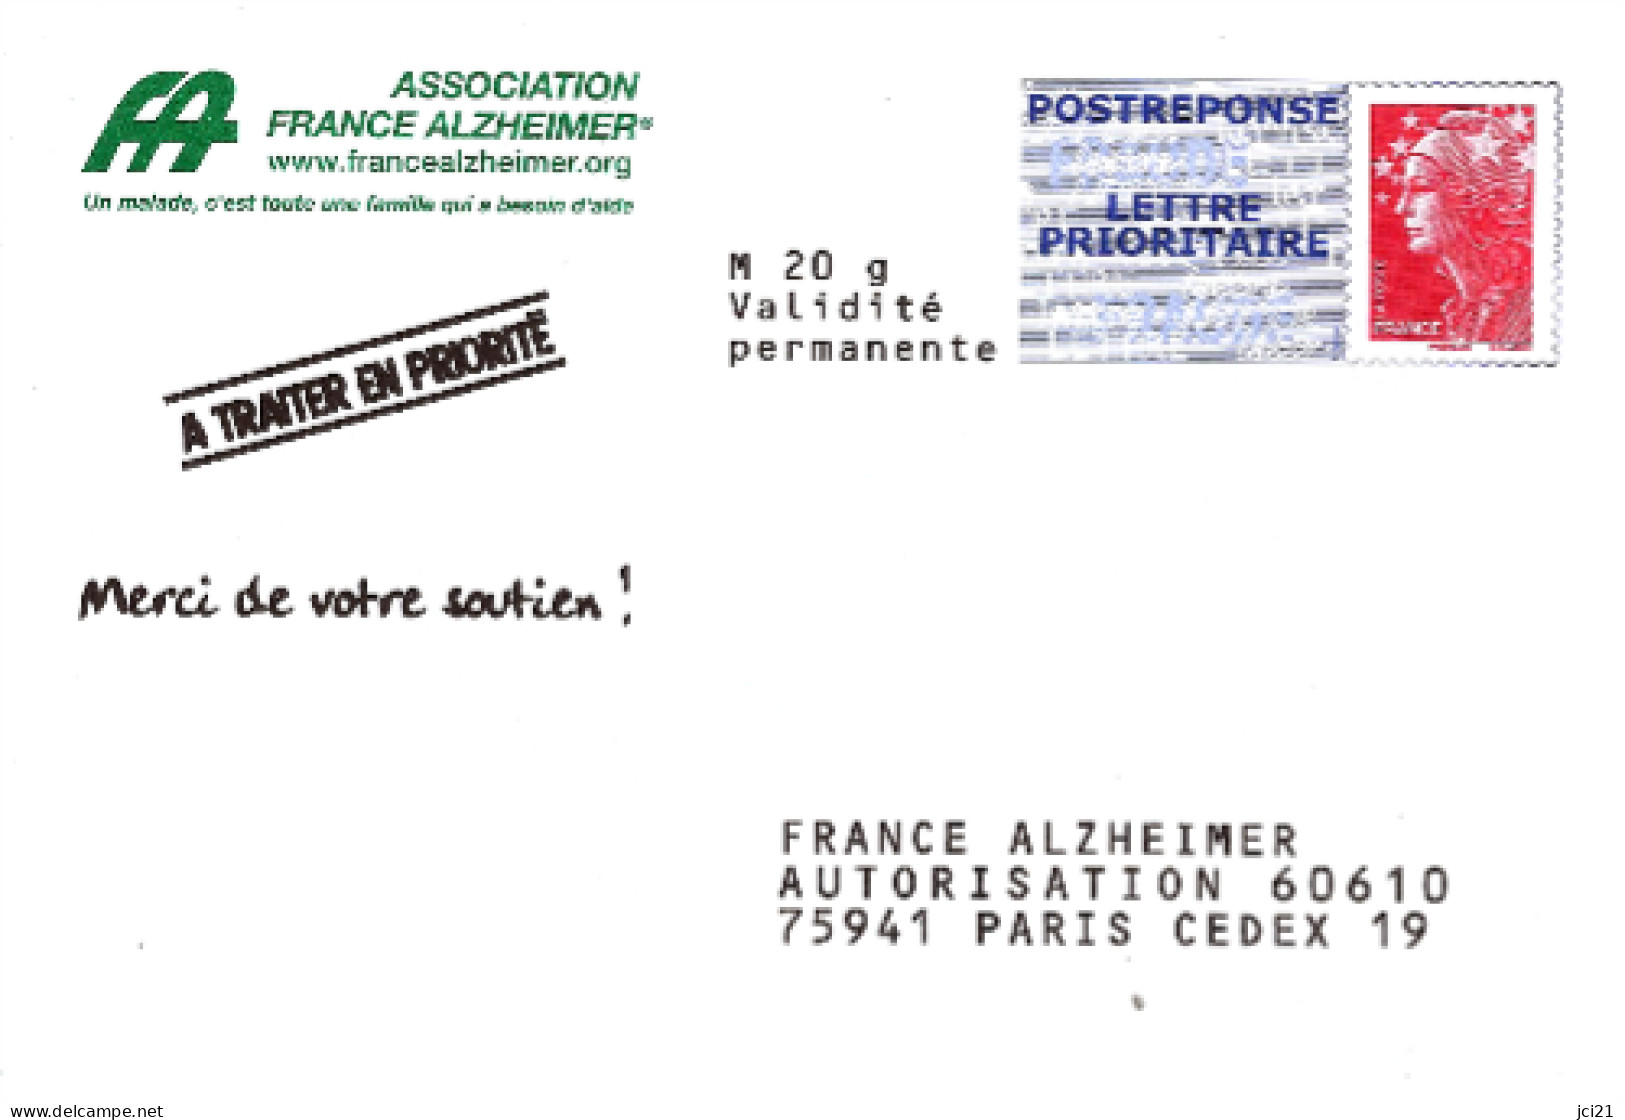 LOT DE 2 PAP BEAUJARD POSTREPONSE LETTRE PRIORITAIRE PHIL@POSTE-FRANCE ALZHEIMER- NEUVES (782)_P214 - Prêts-à-poster:Overprinting/Beaujard